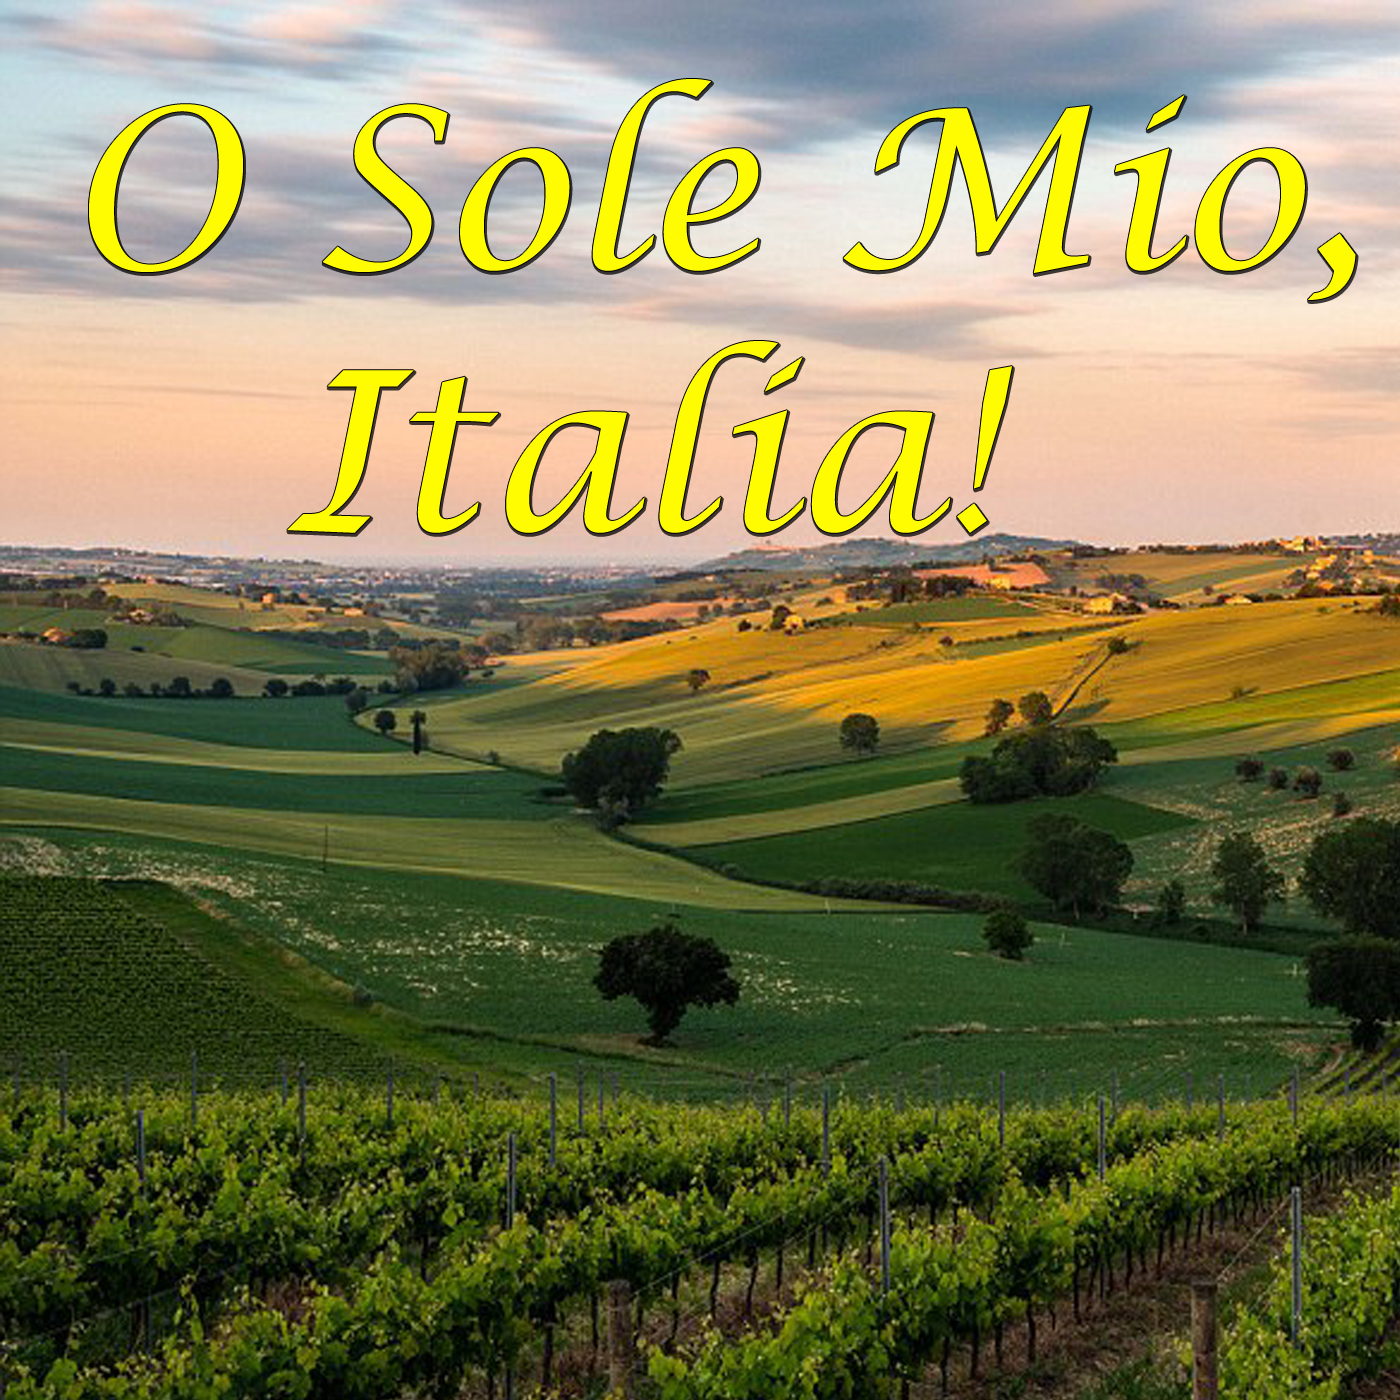 O Sole Mio, Italia!